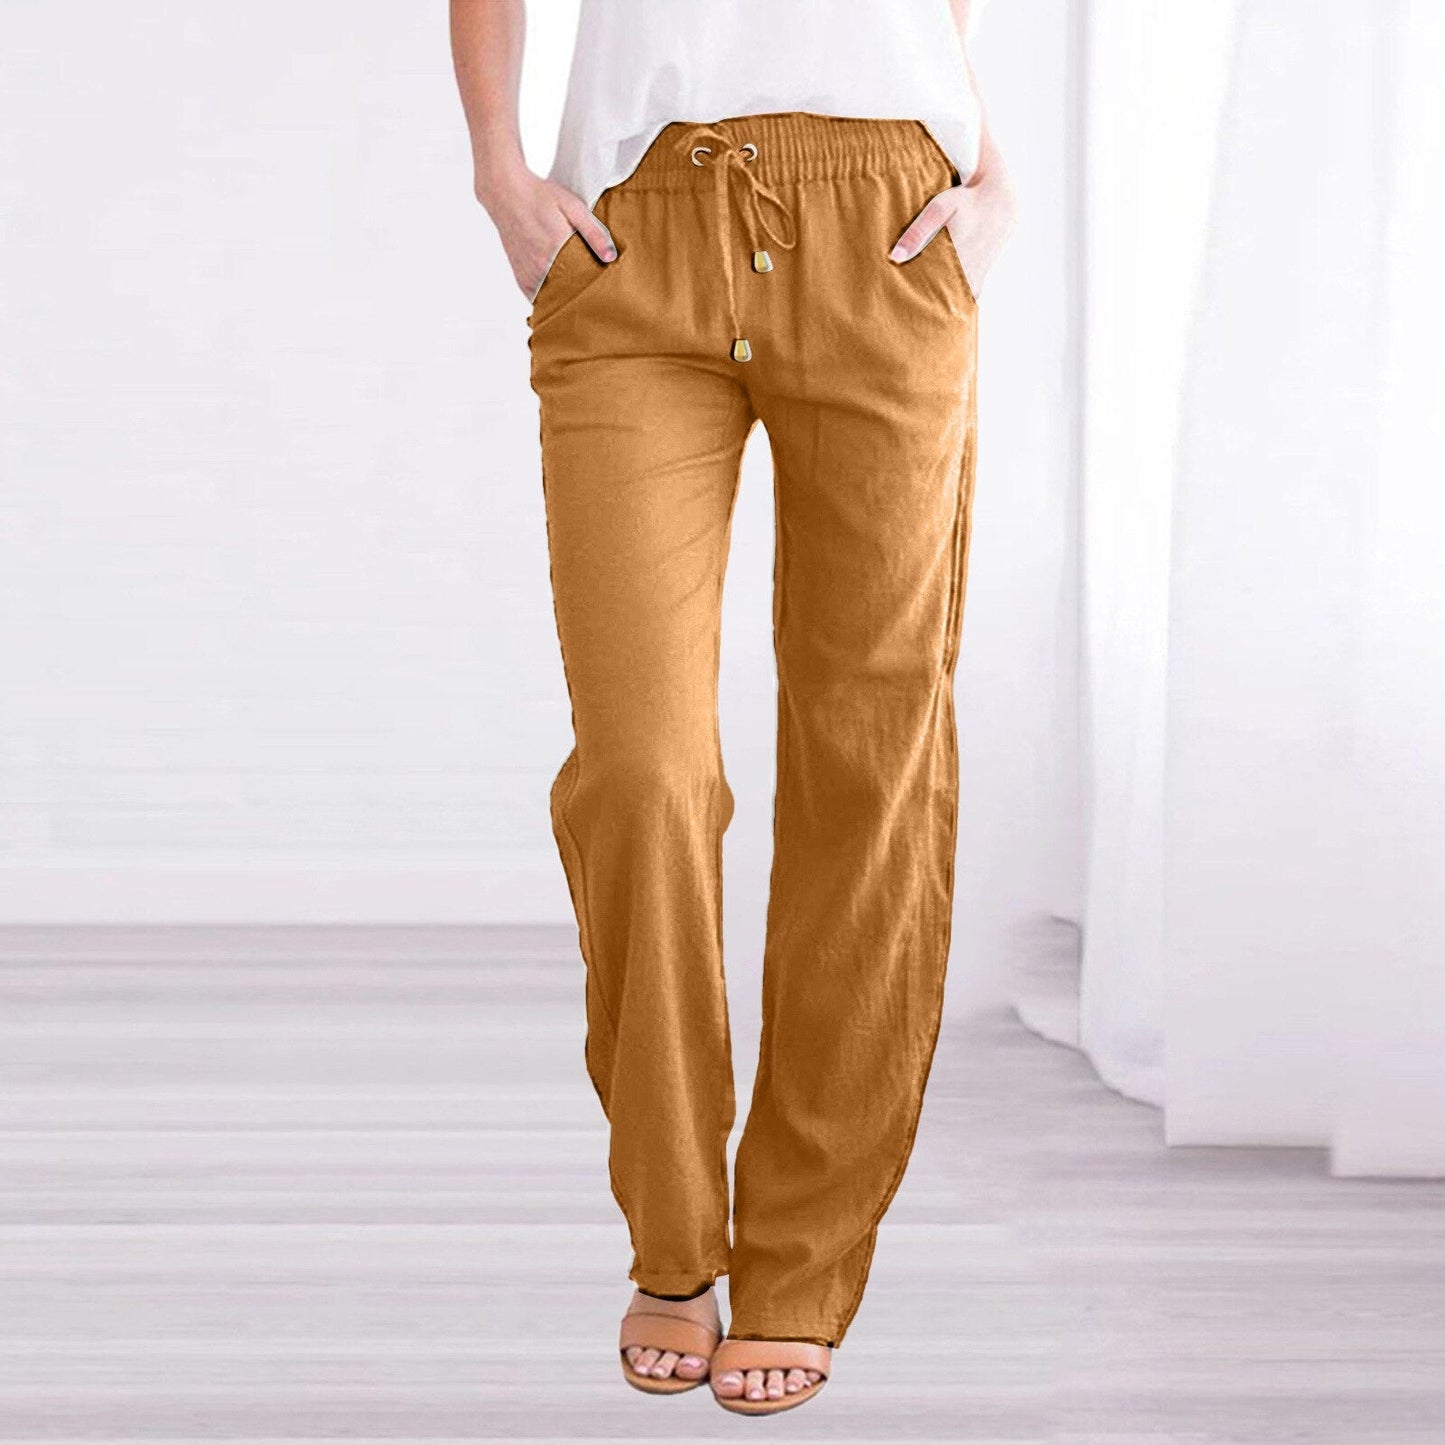 RTW Bottoms  Women trousers design, Womens pants design, Cotton pants women